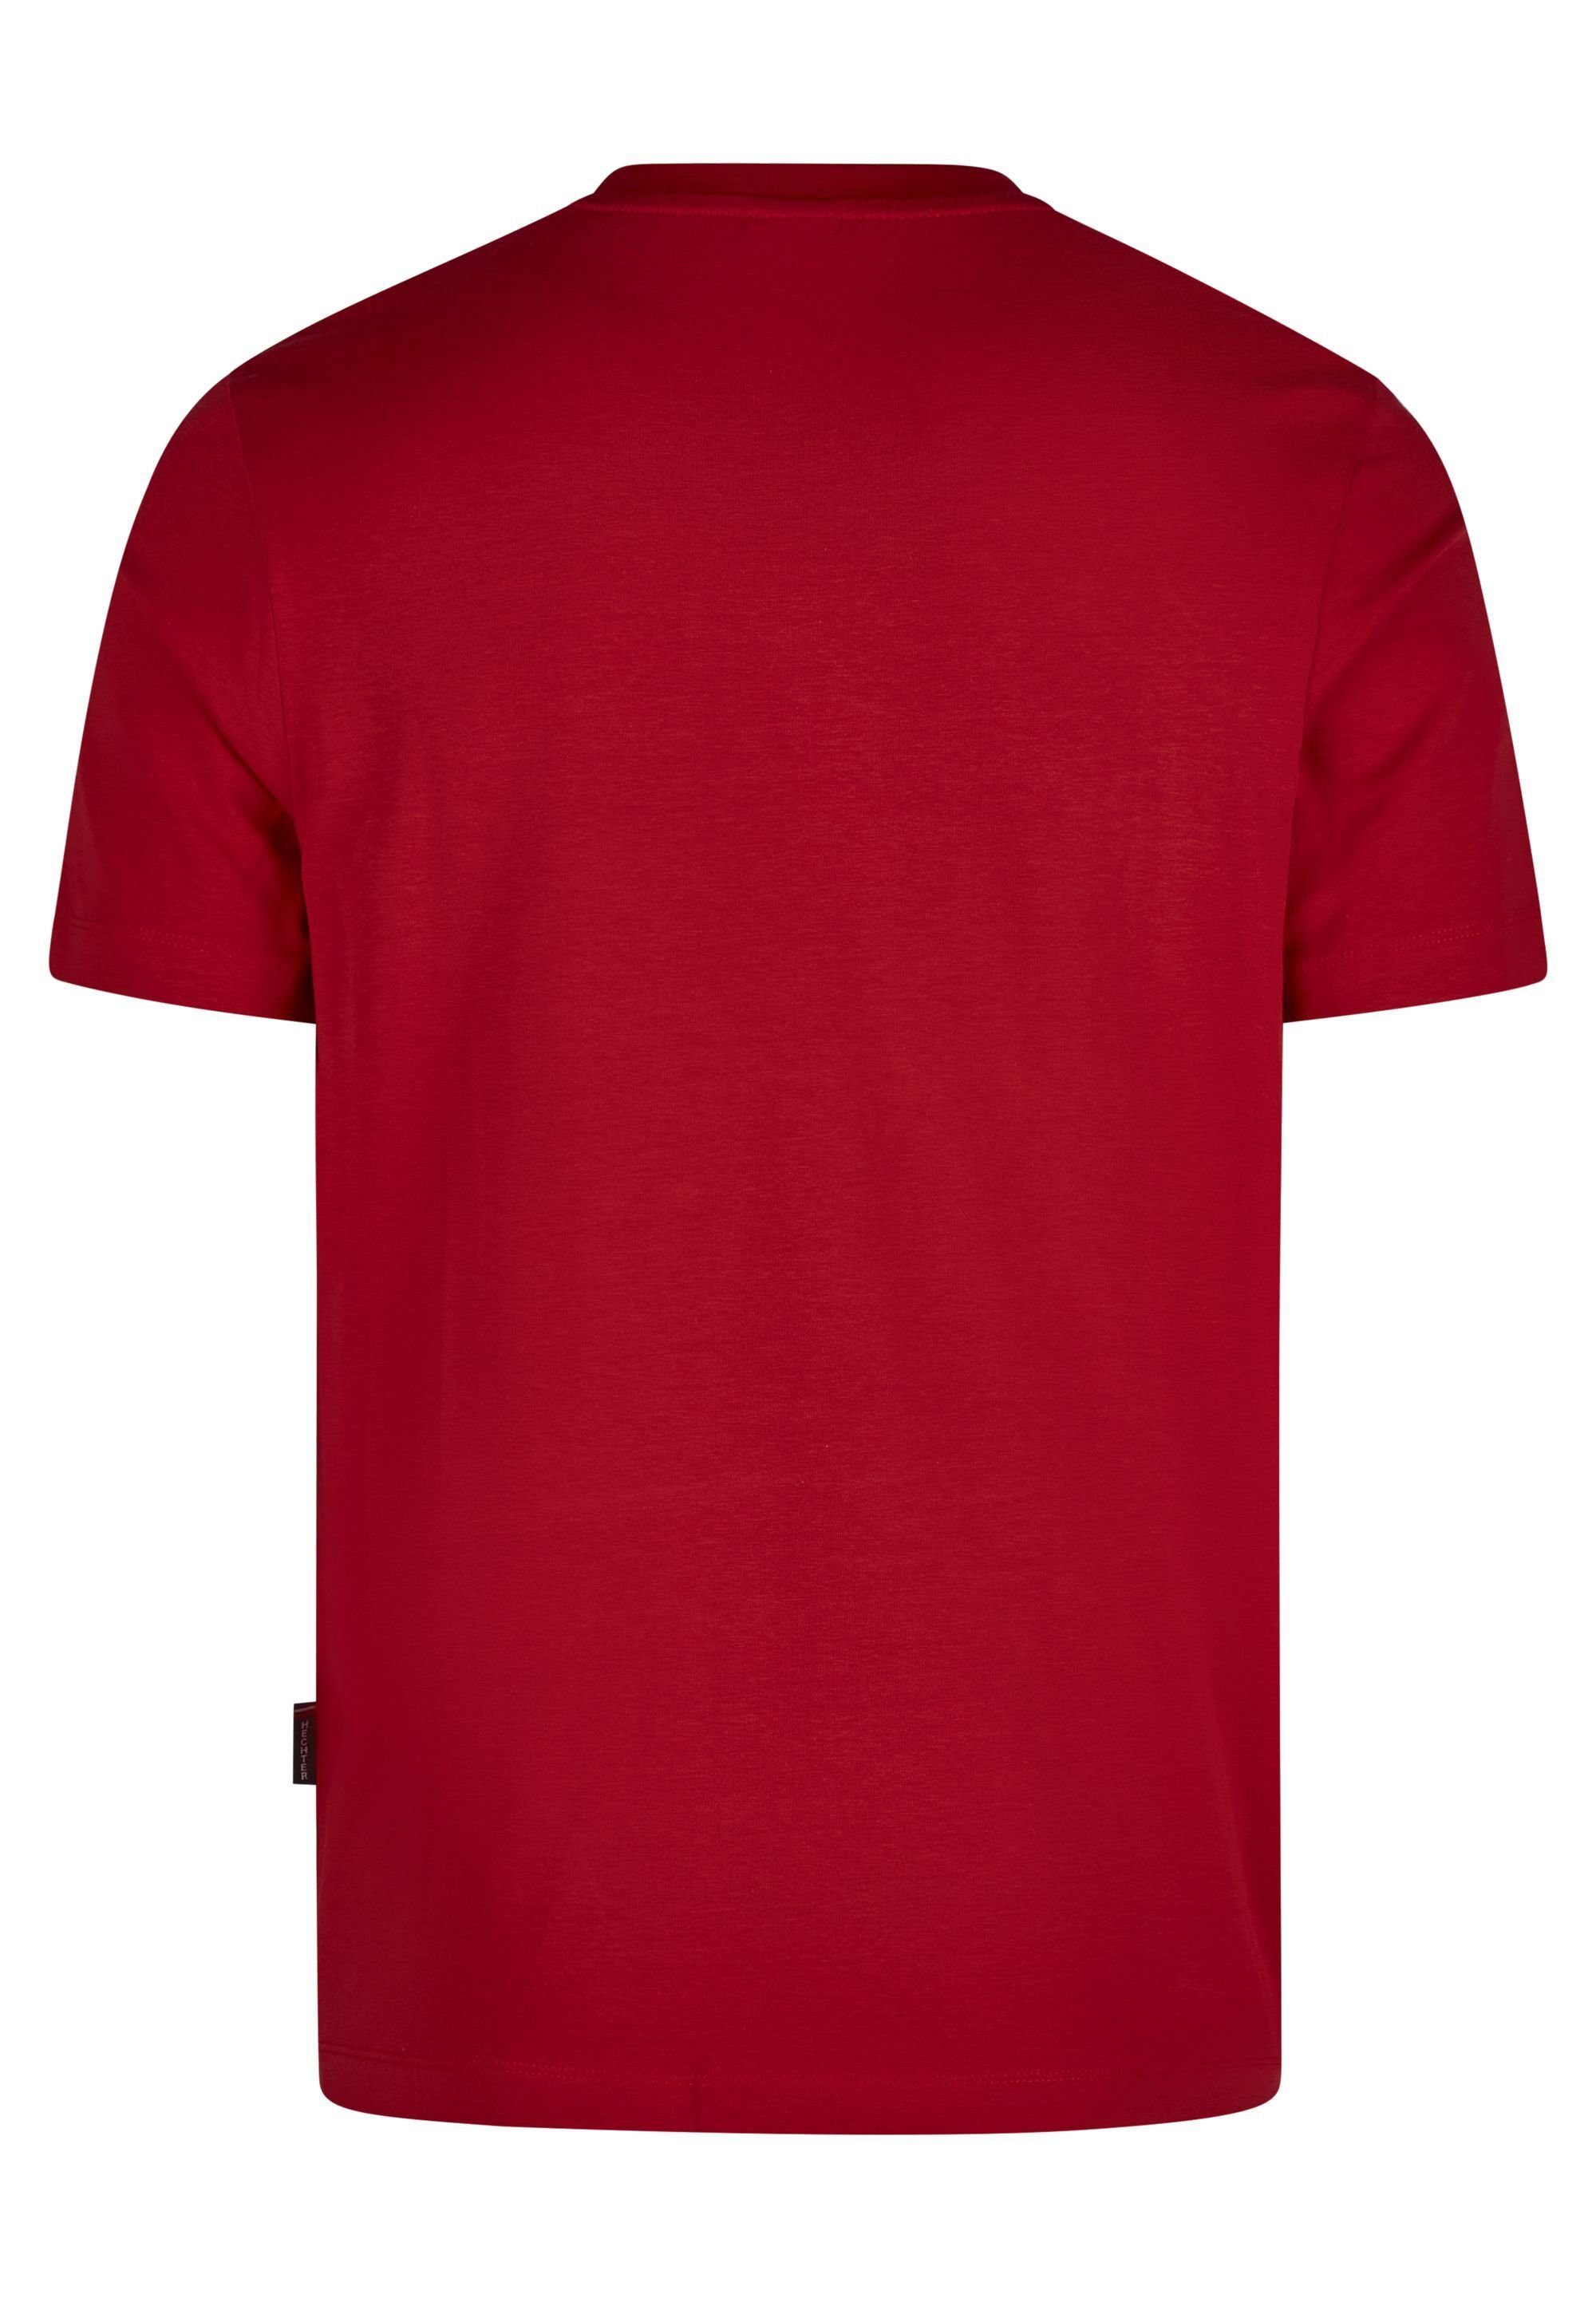 HECHTER PARIS T-Shirt mit chili Ärmeln langen